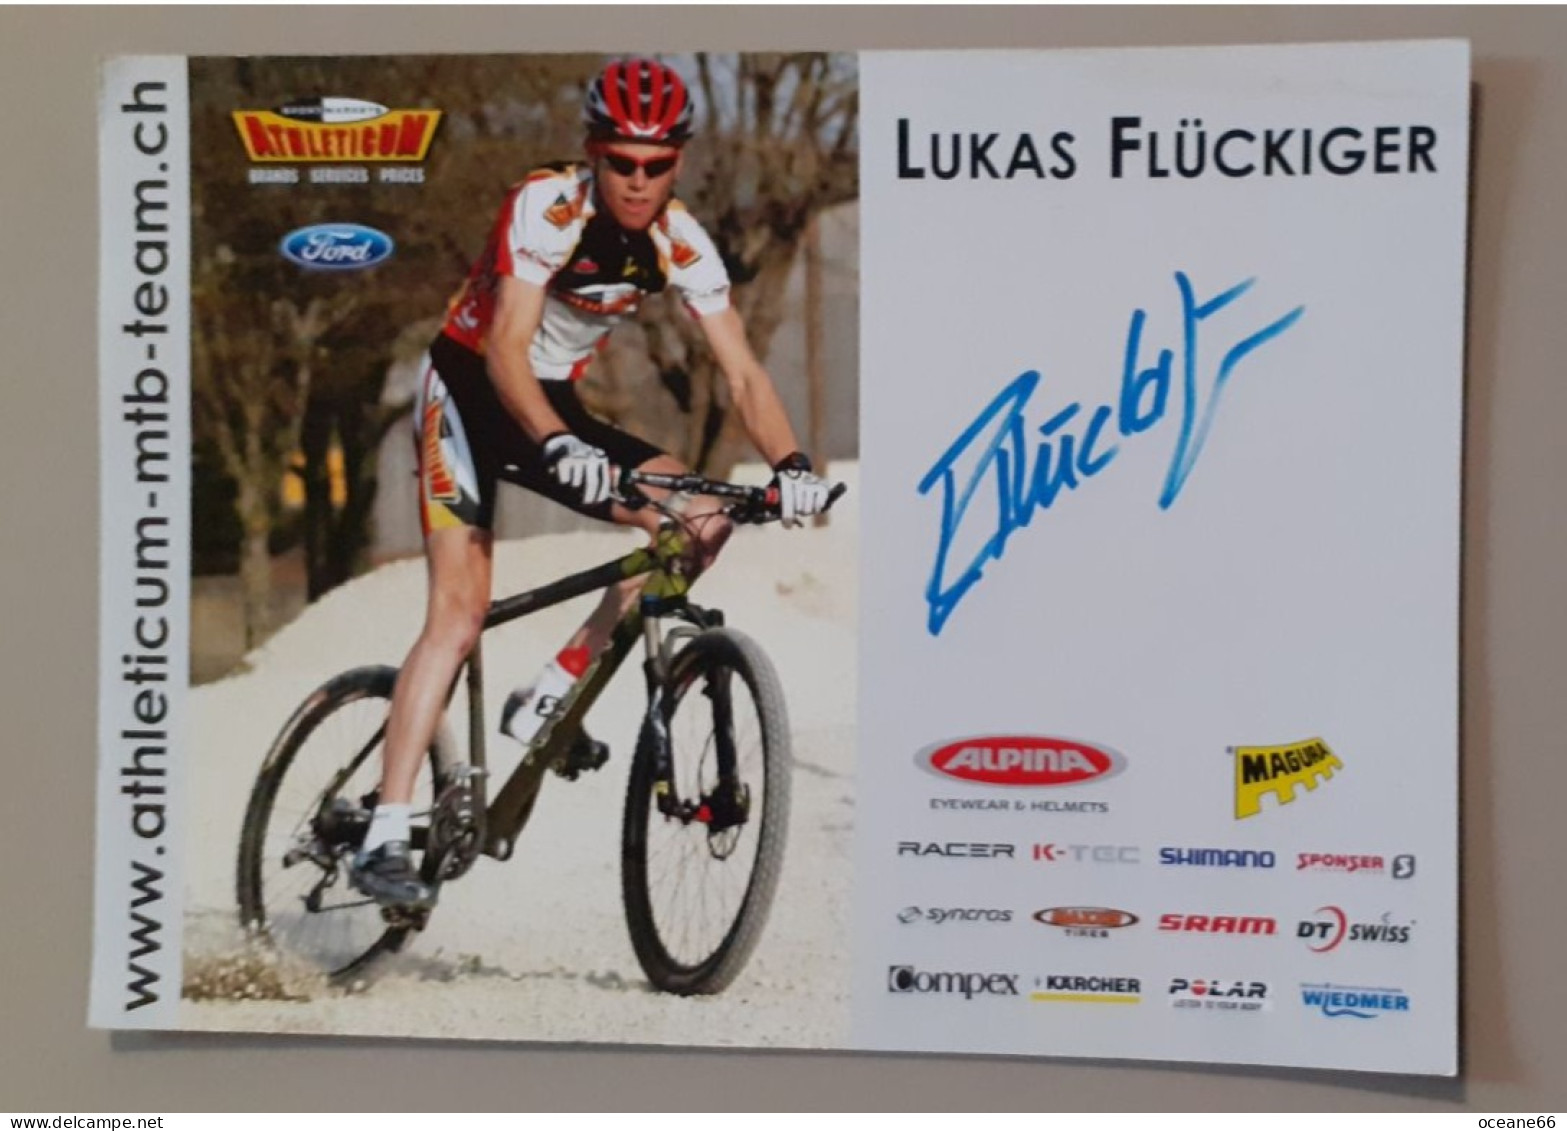 Autographe Lukas Flückiger Athleticum Format A5 - Ciclismo